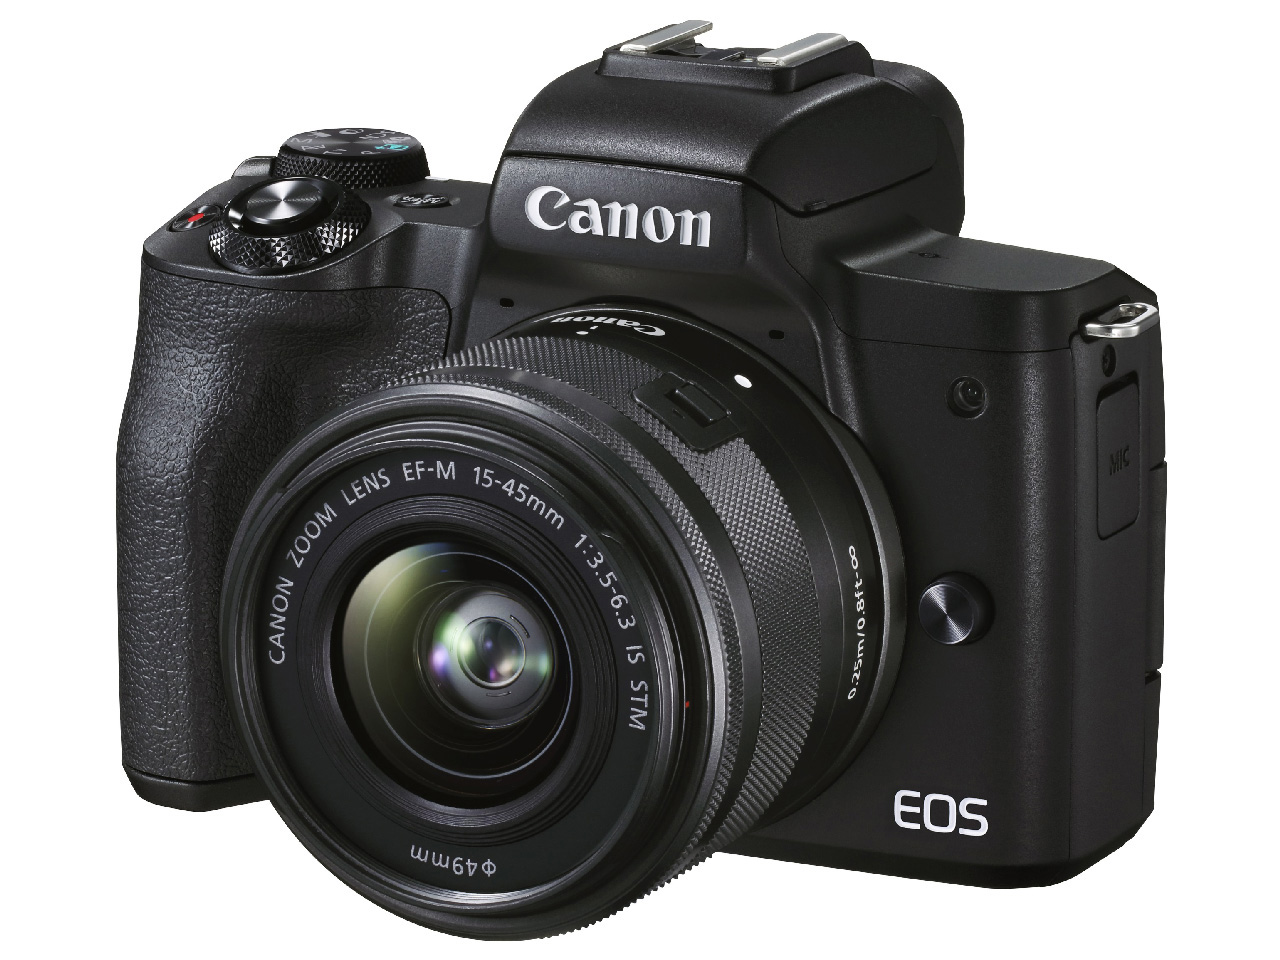 Canon EOS kissm kissm2 EF-M 22mm 単焦点レンズ+radiokameleon.ba